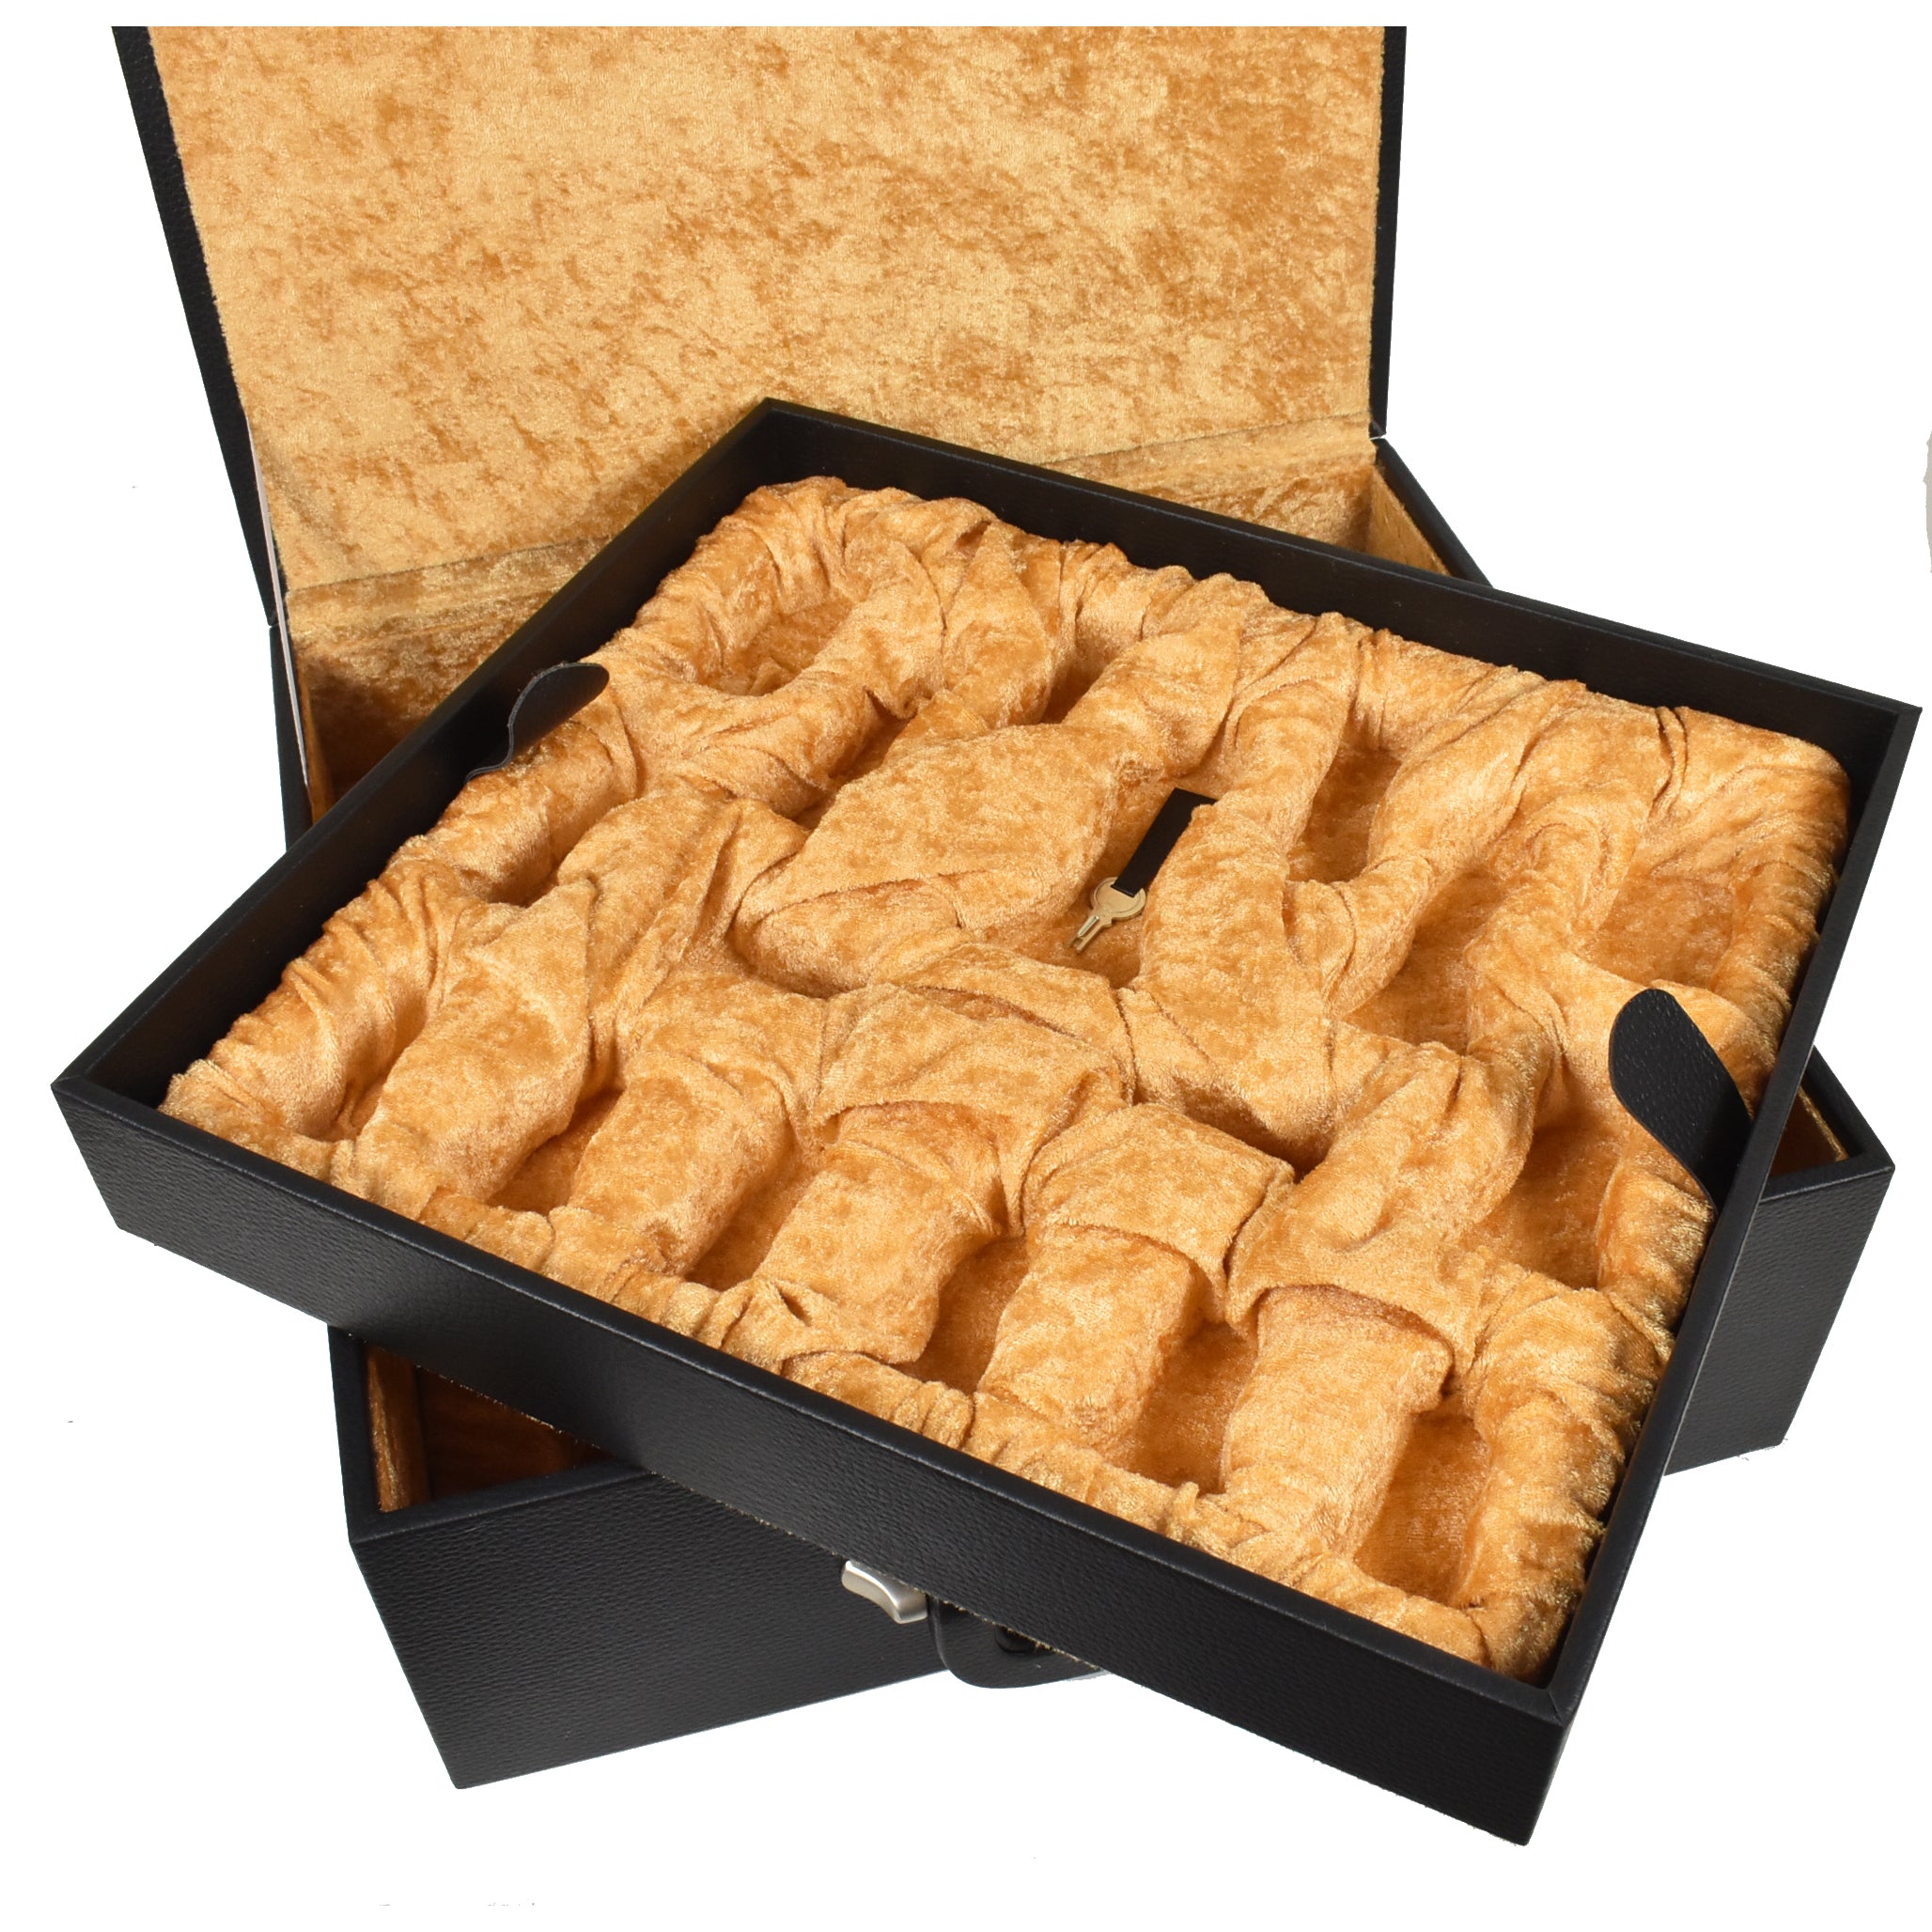 4.5" Carvers' Art Luxury Chess Ebony Wood Pieces with 21" Ebony & Maple Wood Luxury Chess board with Carved Border and Leatherette Coffer Storage Box